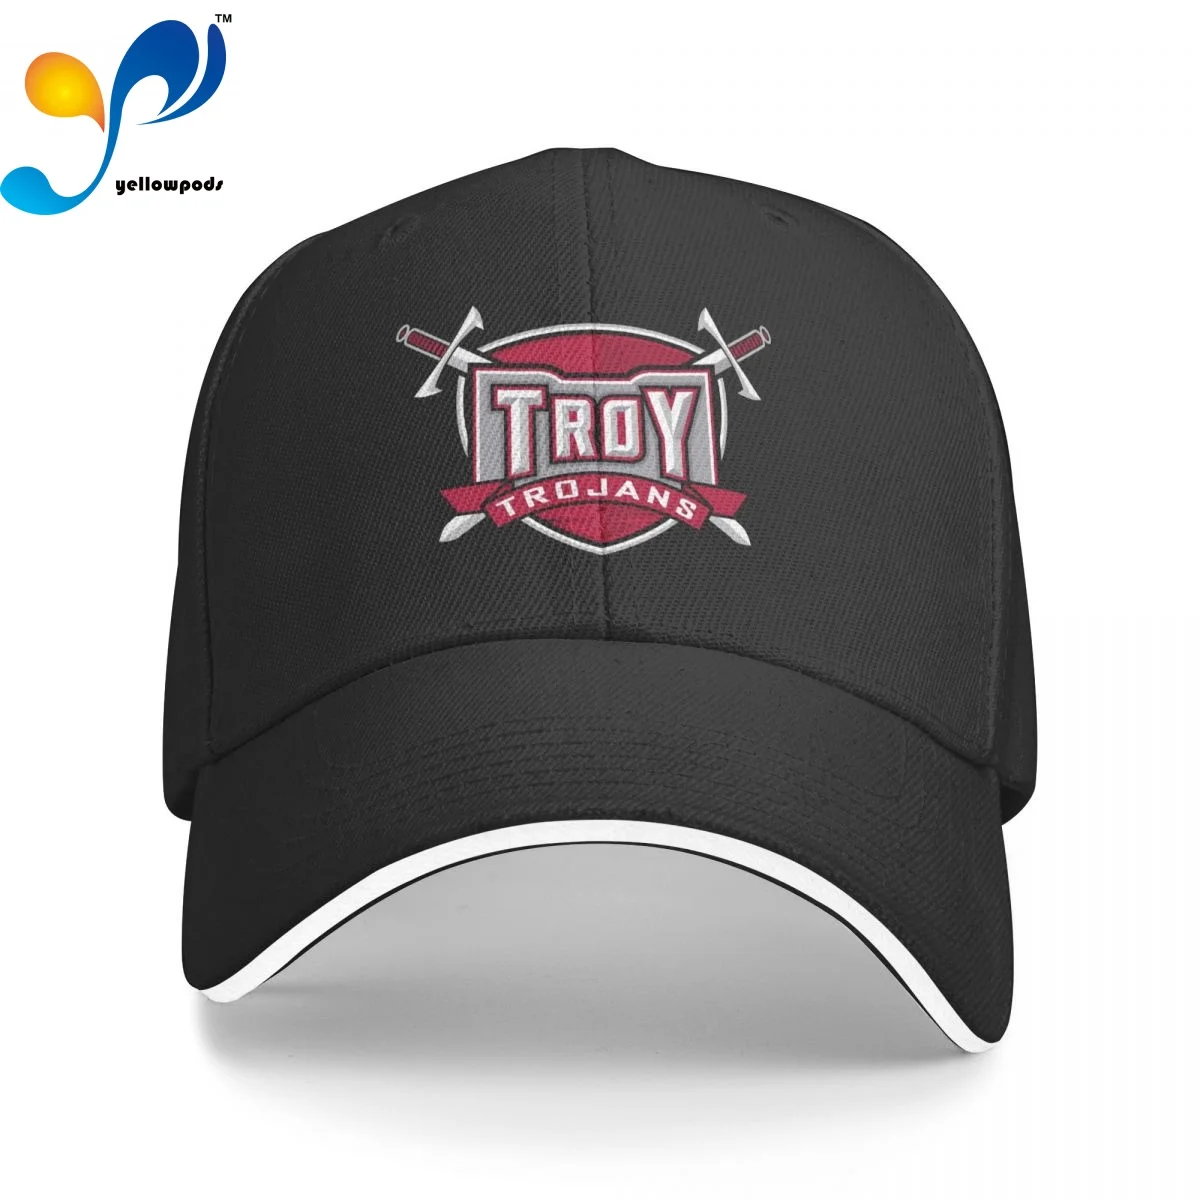 

Troy Men's New Baseball Cap University Fashion Sun Hats Caps for Men and Women